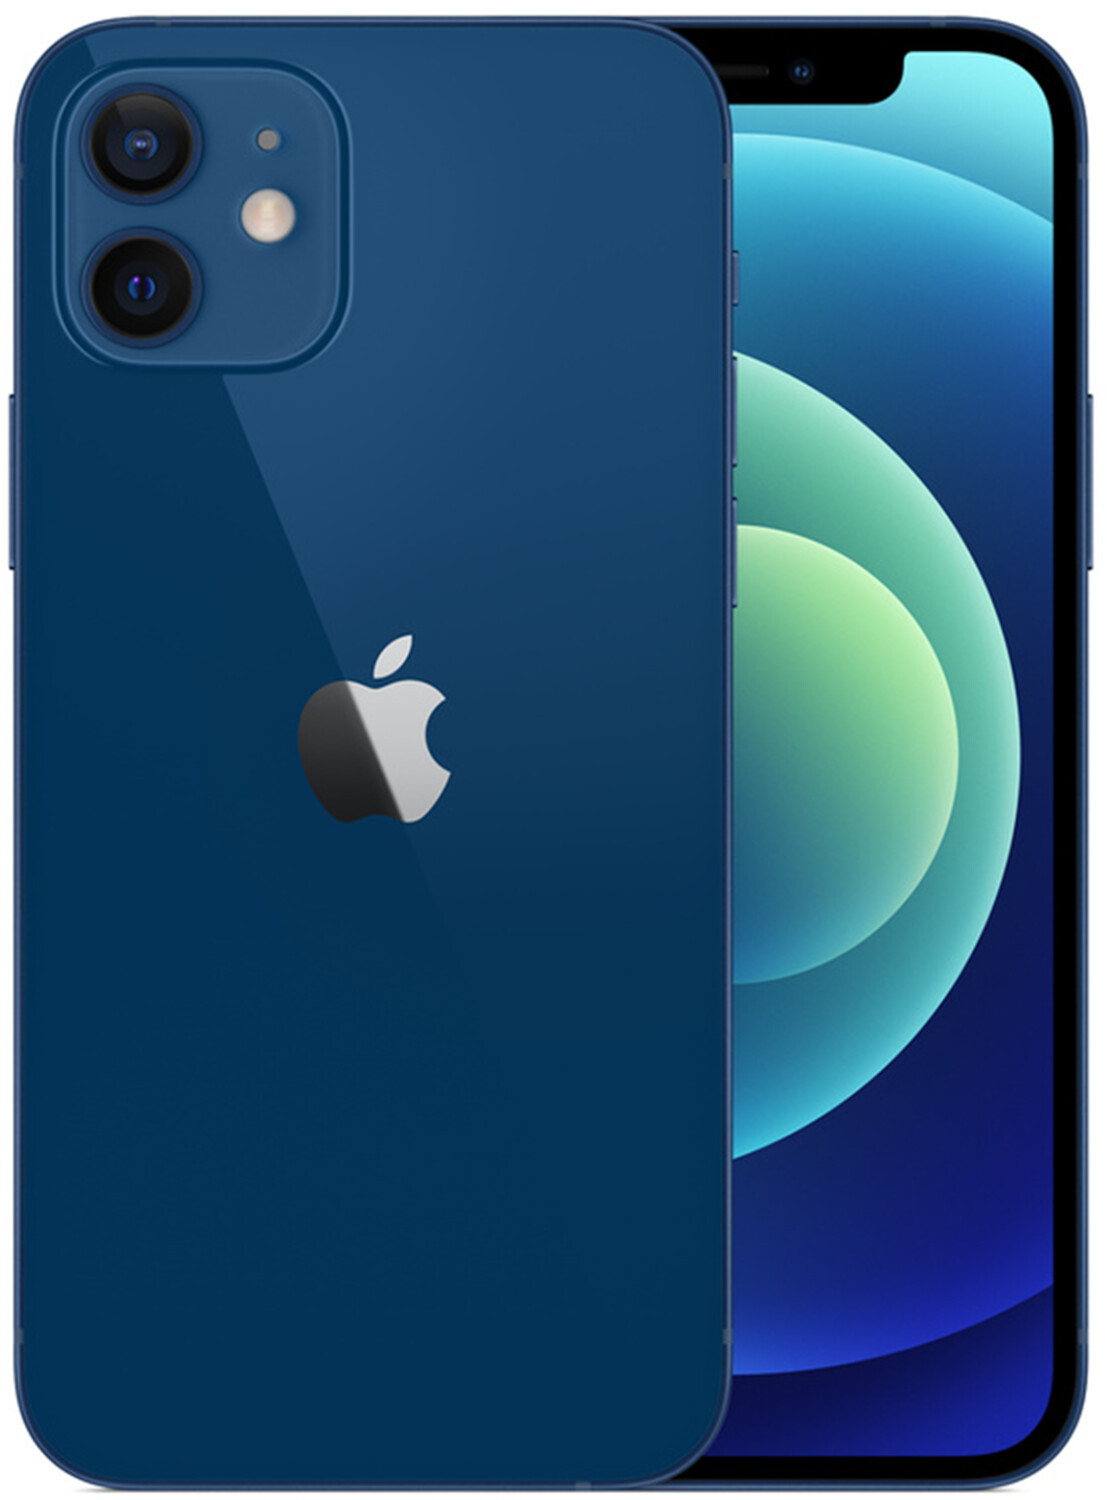 Apple iPhone 12 256GB Blau ab 545,00 € | Preisvergleich bei idealo.de